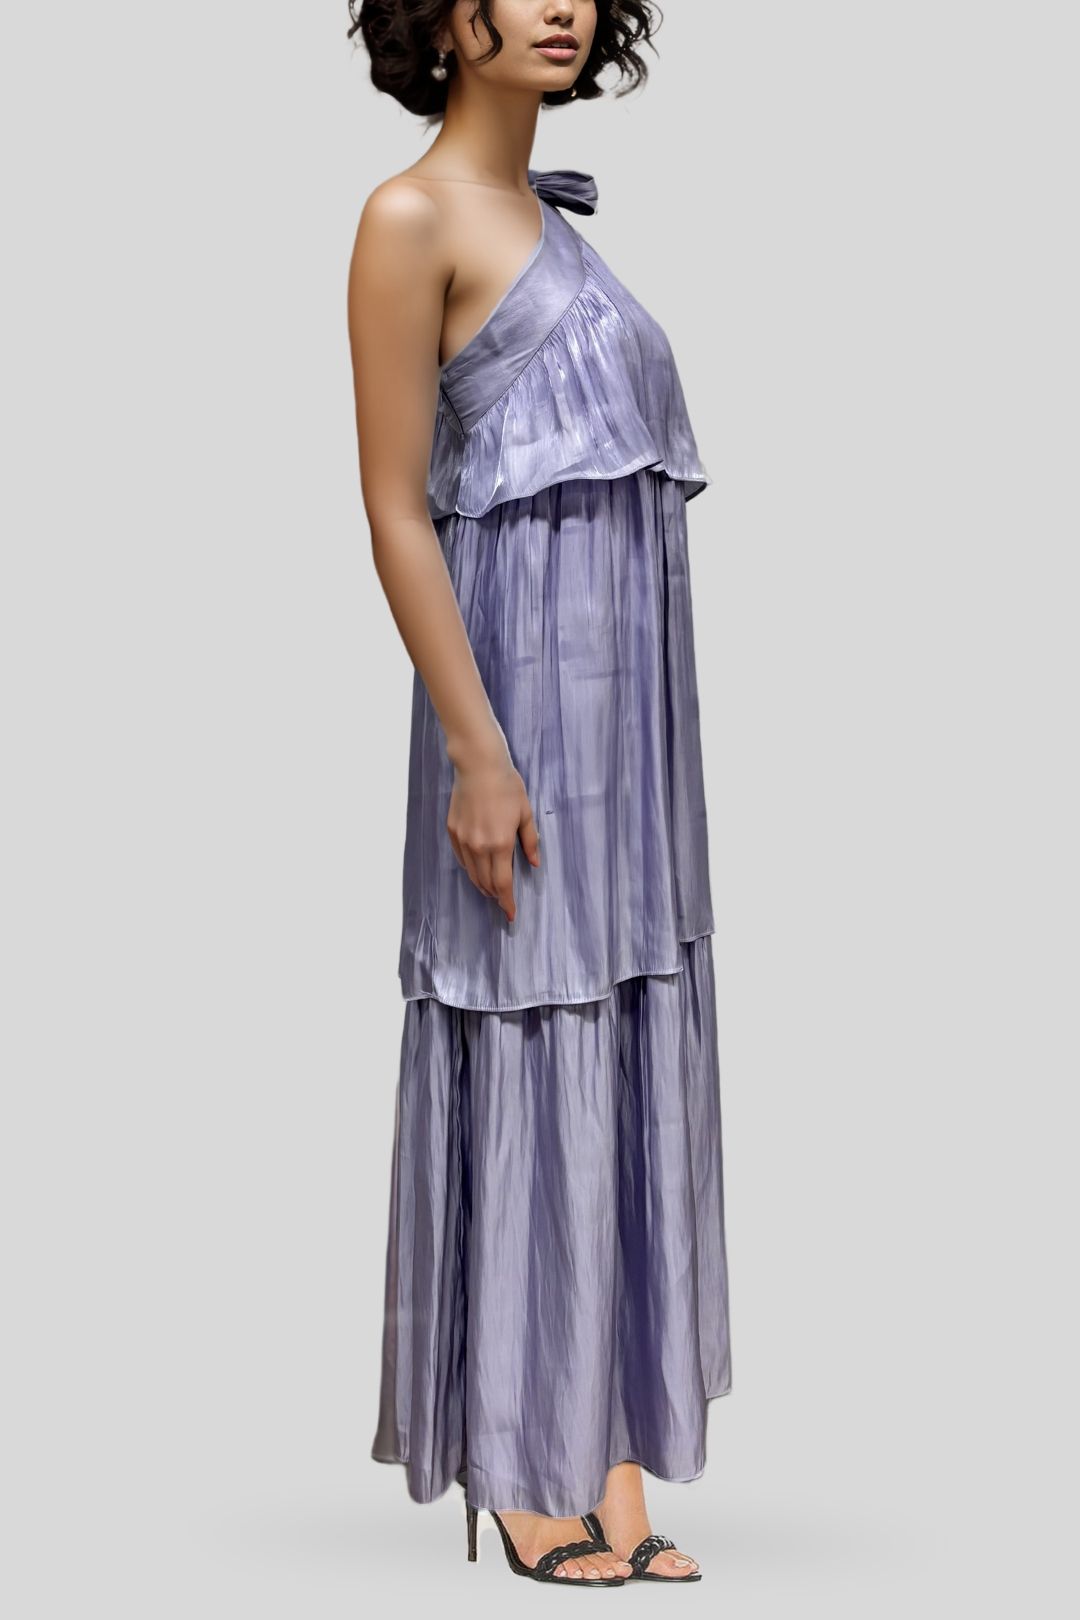 Y.A.S Lavender One Shoulder Long Dress